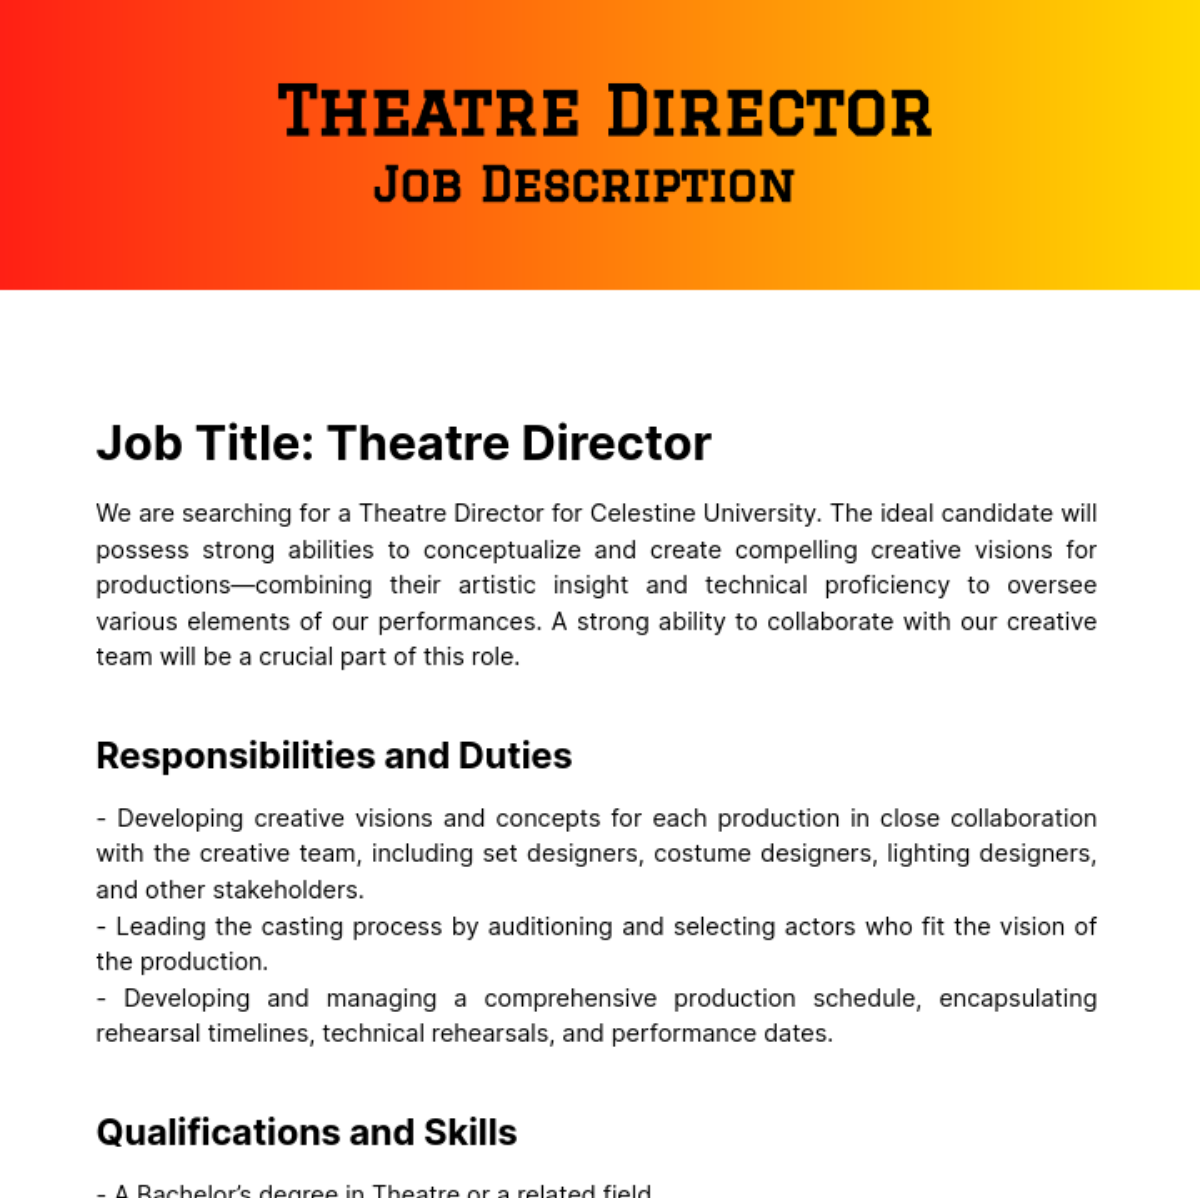 Theatre Director Job Description Template